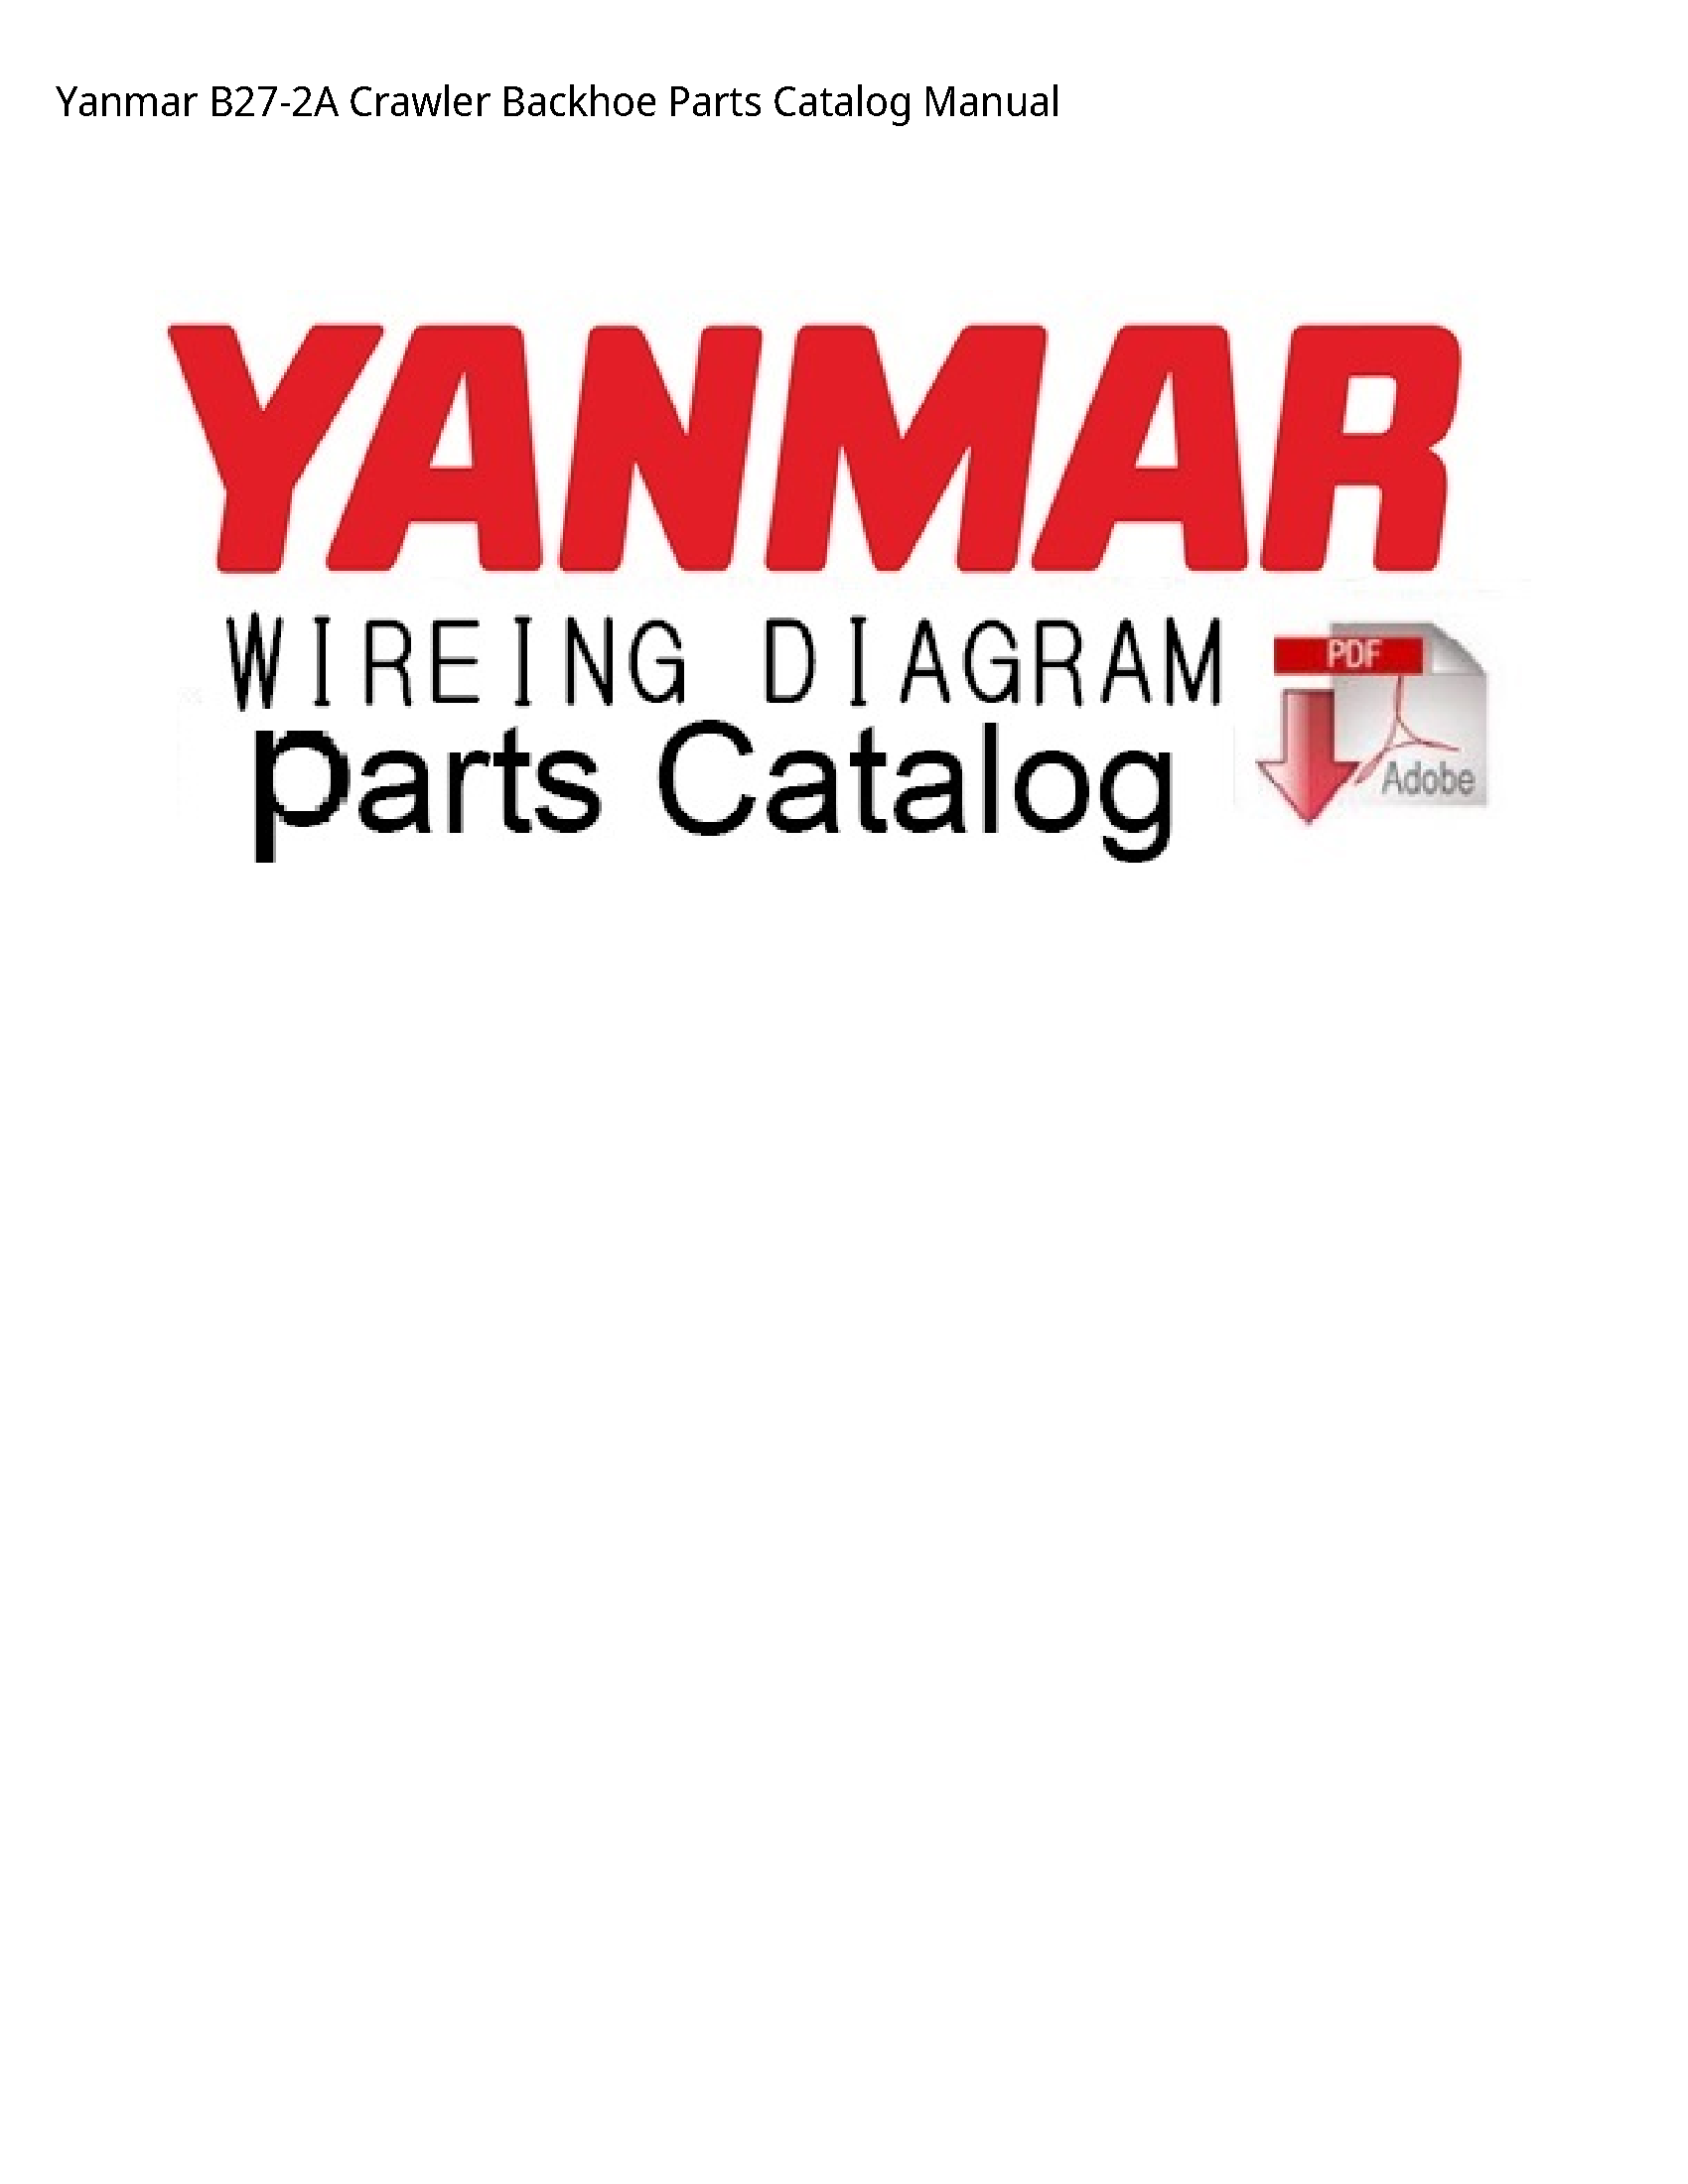 Yanmar B27-2A Crawler Backhoe Parts Catalog manual